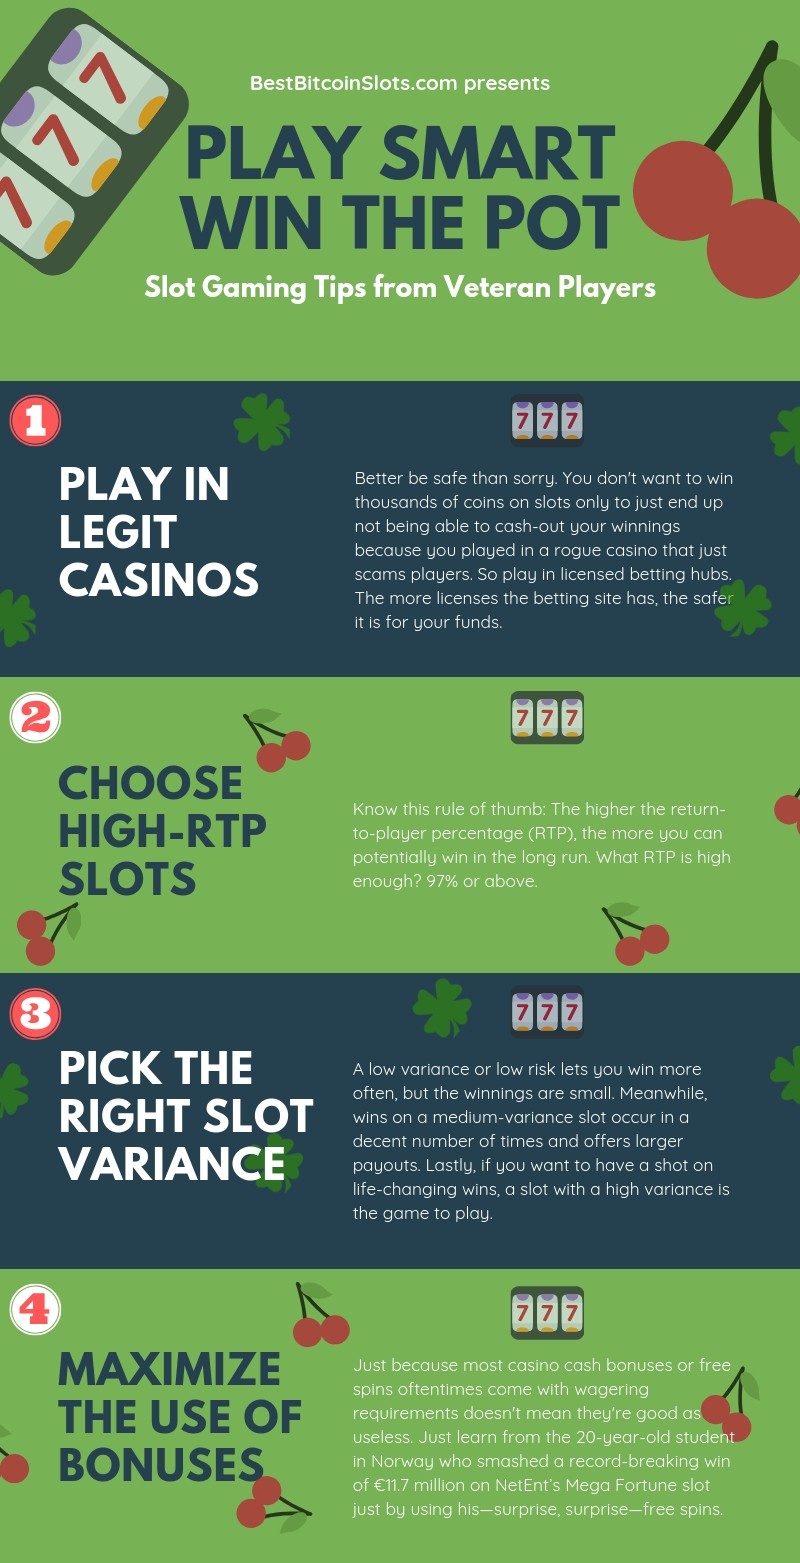 4 Slot Gaming Tips from Veteran Players